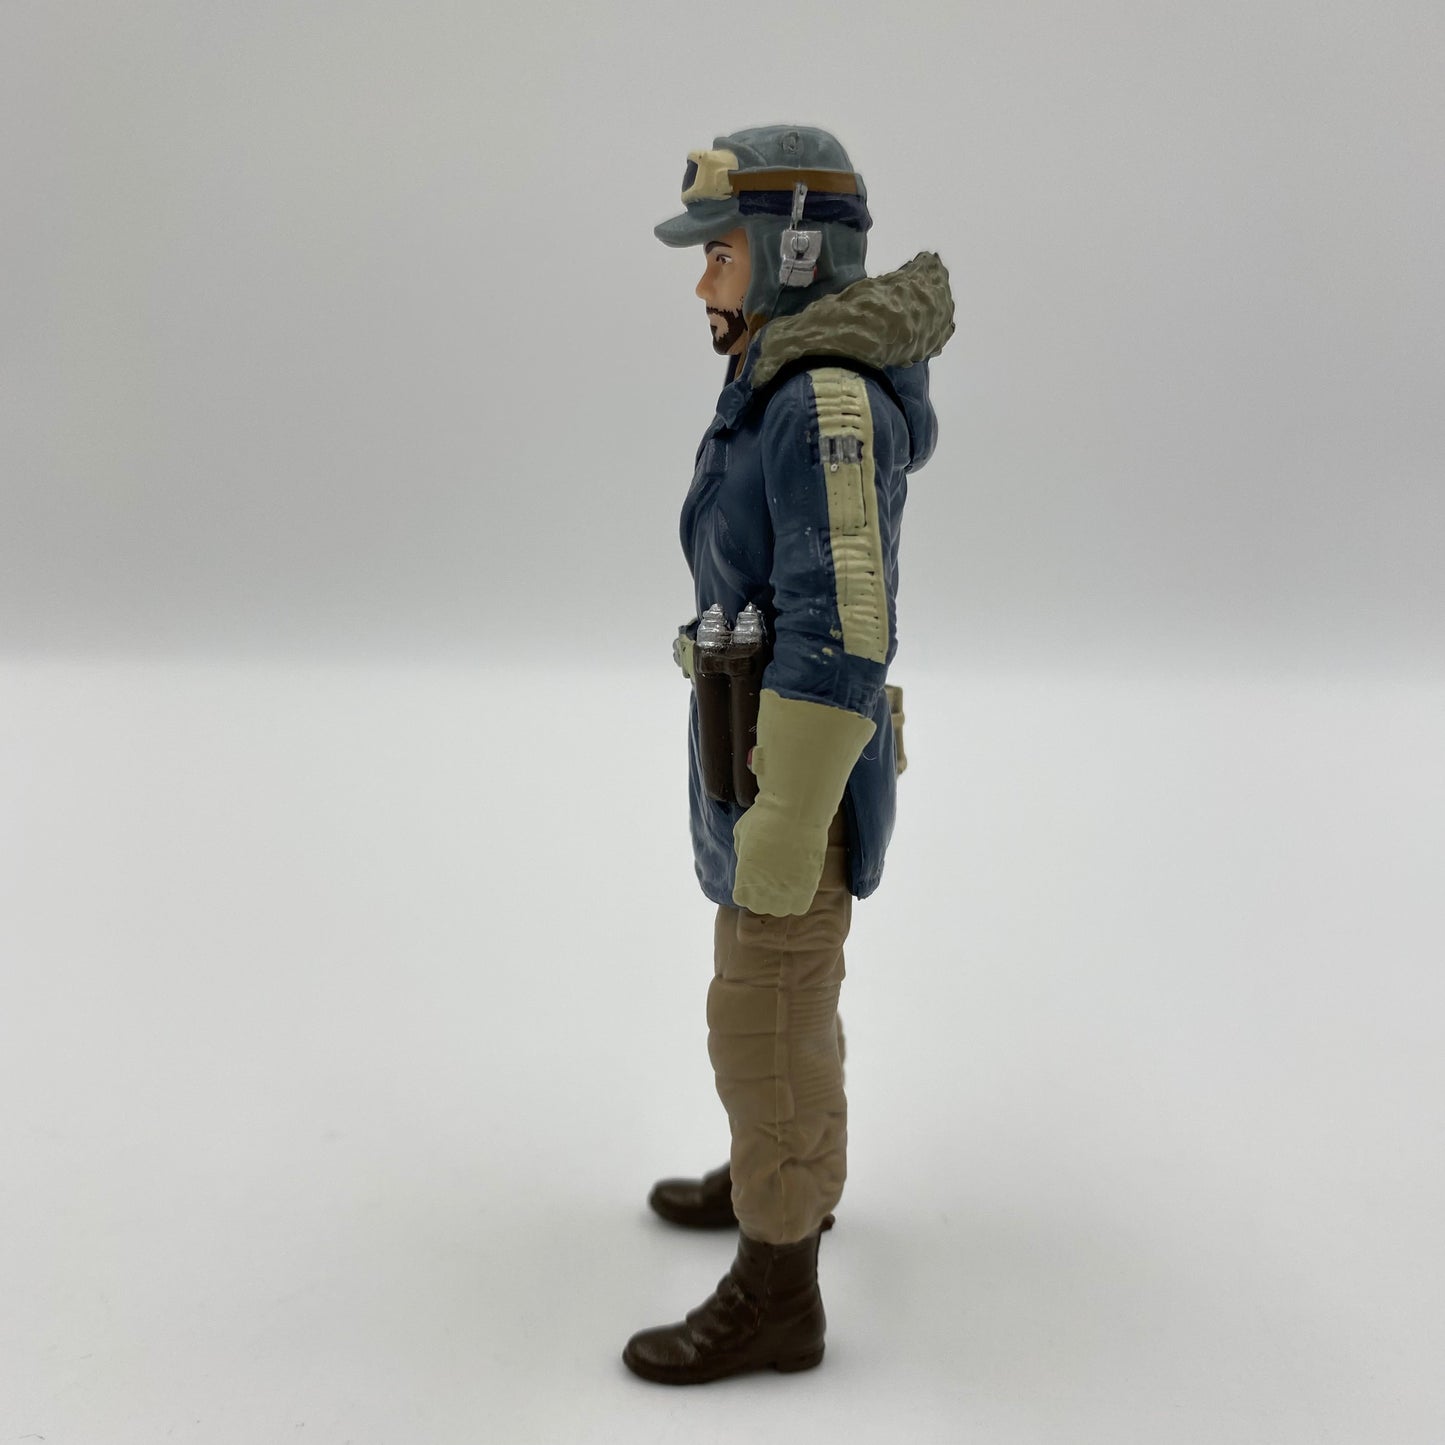 Star Wars Rogue One Captain Cassian Andor (Eadu) loose 3.75” action figure (2016) Hasbro